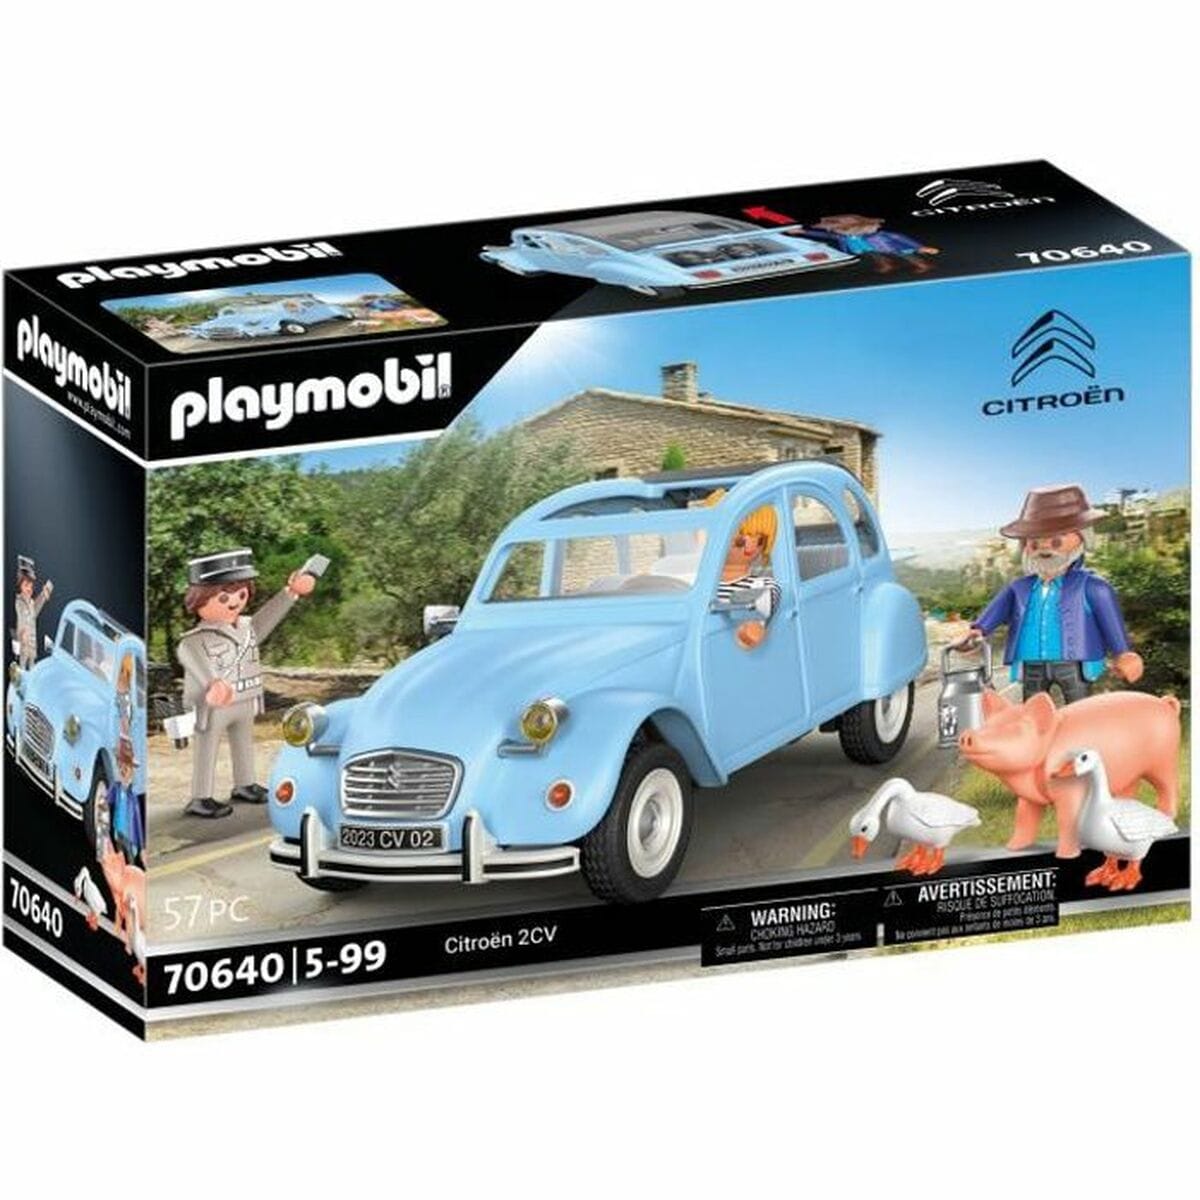 Playmobil Spielzeug | Kostüme > Spielzeug und Spiele > Weiteres spielzeug Spielset Fahrzeuge Playmobil Citroen 2CV 70646 Auto Blau 57 Stücke